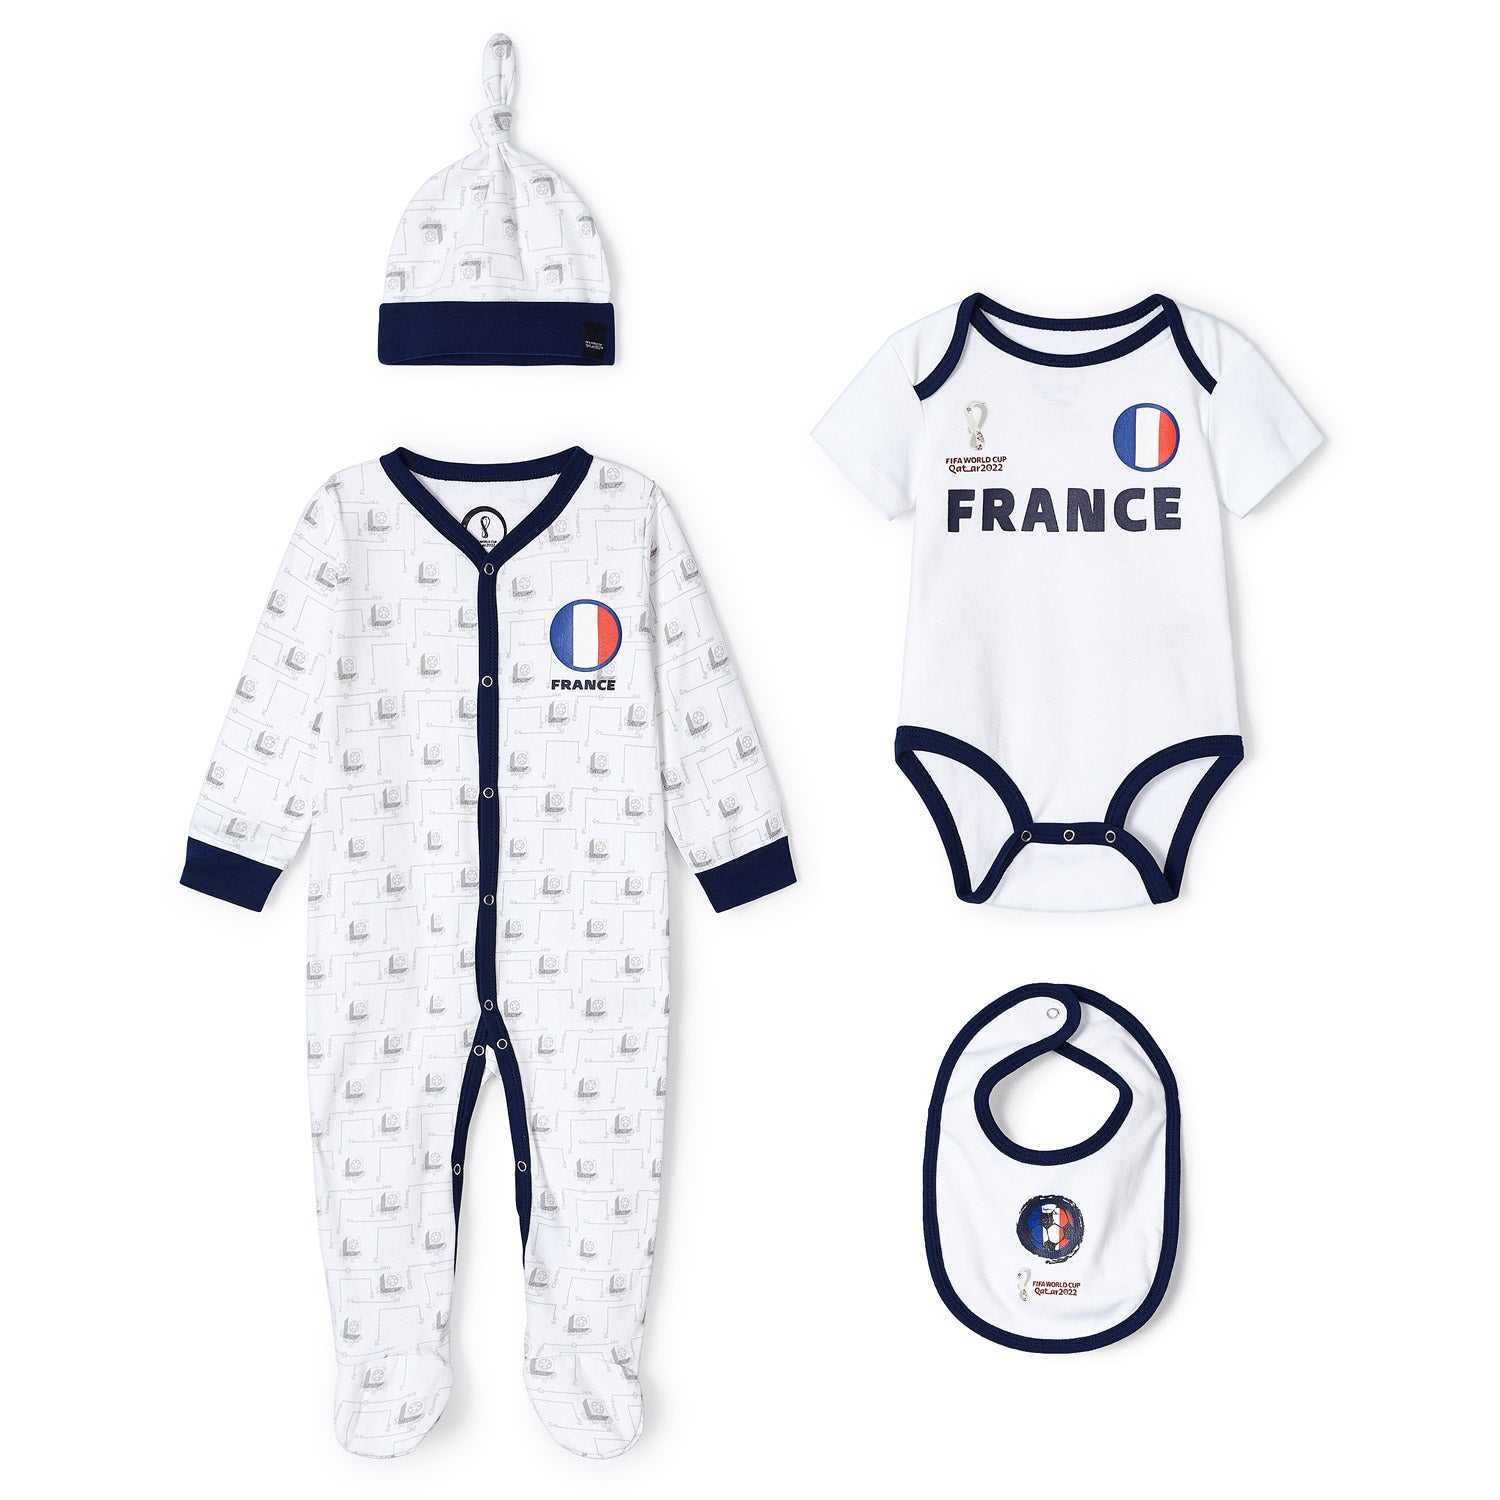 2022 World Cup France White Romper - Infant/Toddler